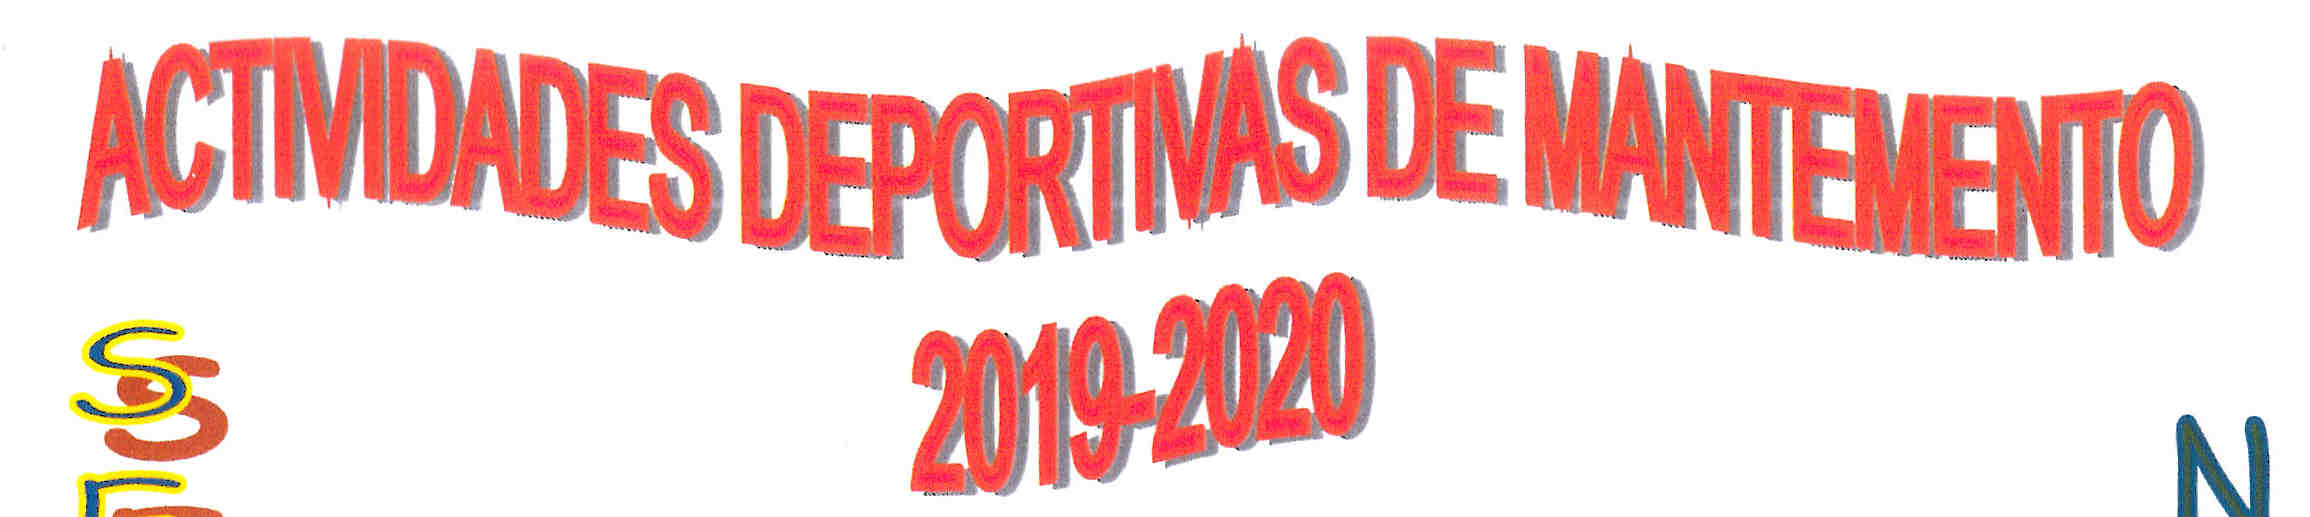 ACTIVIDADES DEPORTIVAS DE MANTEMENTO 2019-2020